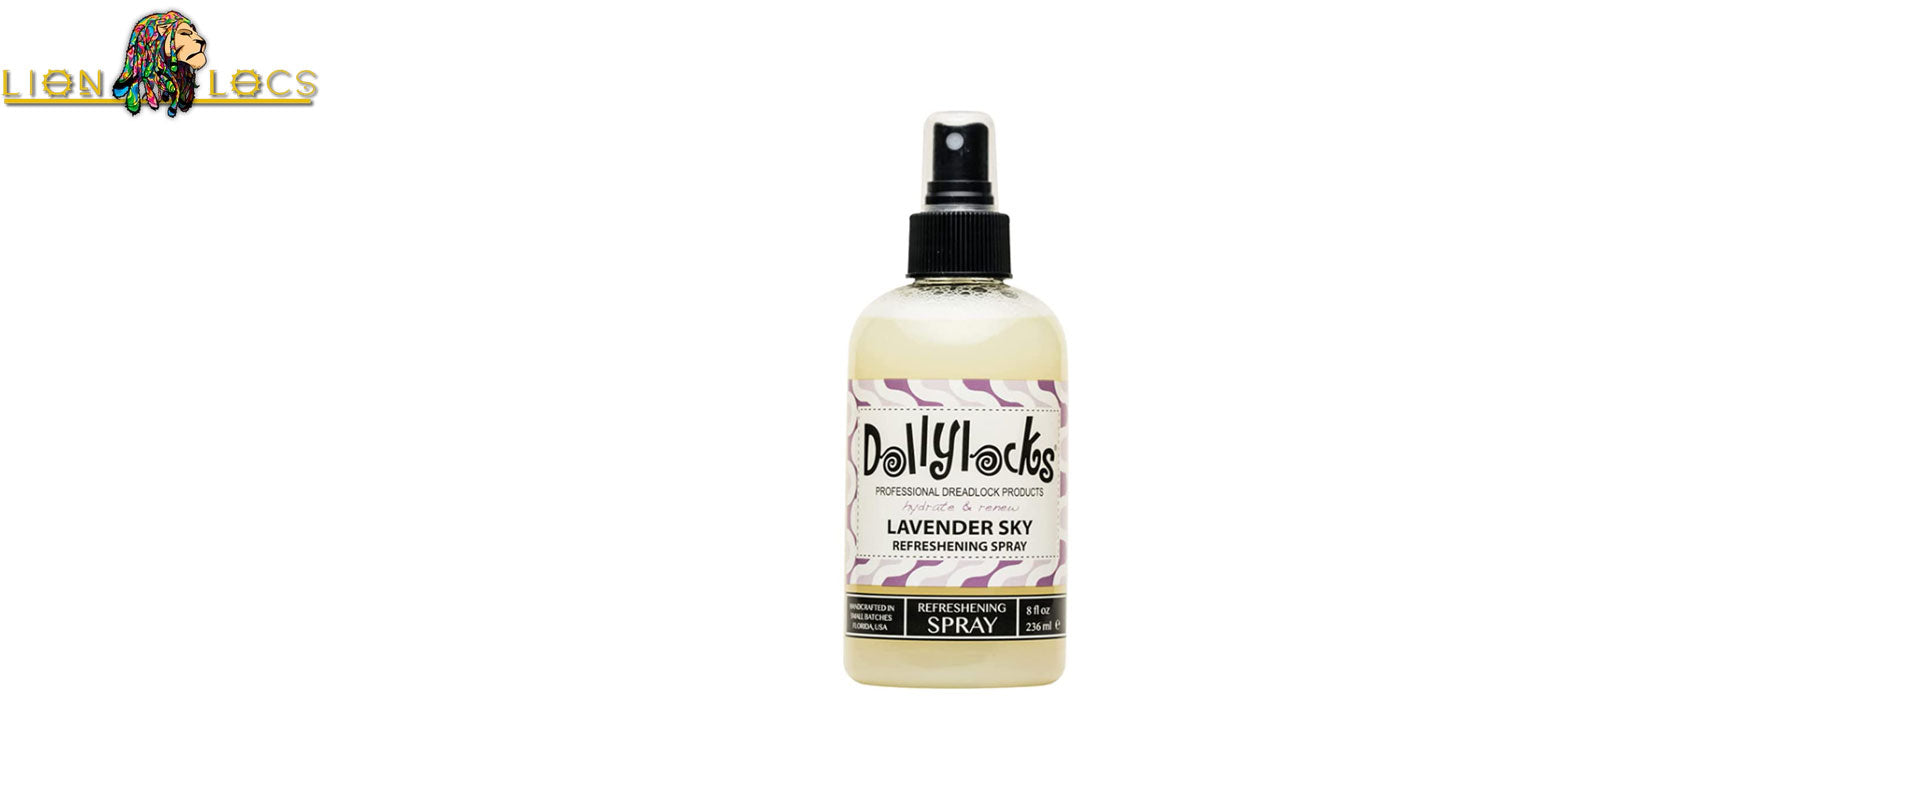 Dollylocks Tea Tree Spearmint Shampoo + Refreshing Spray